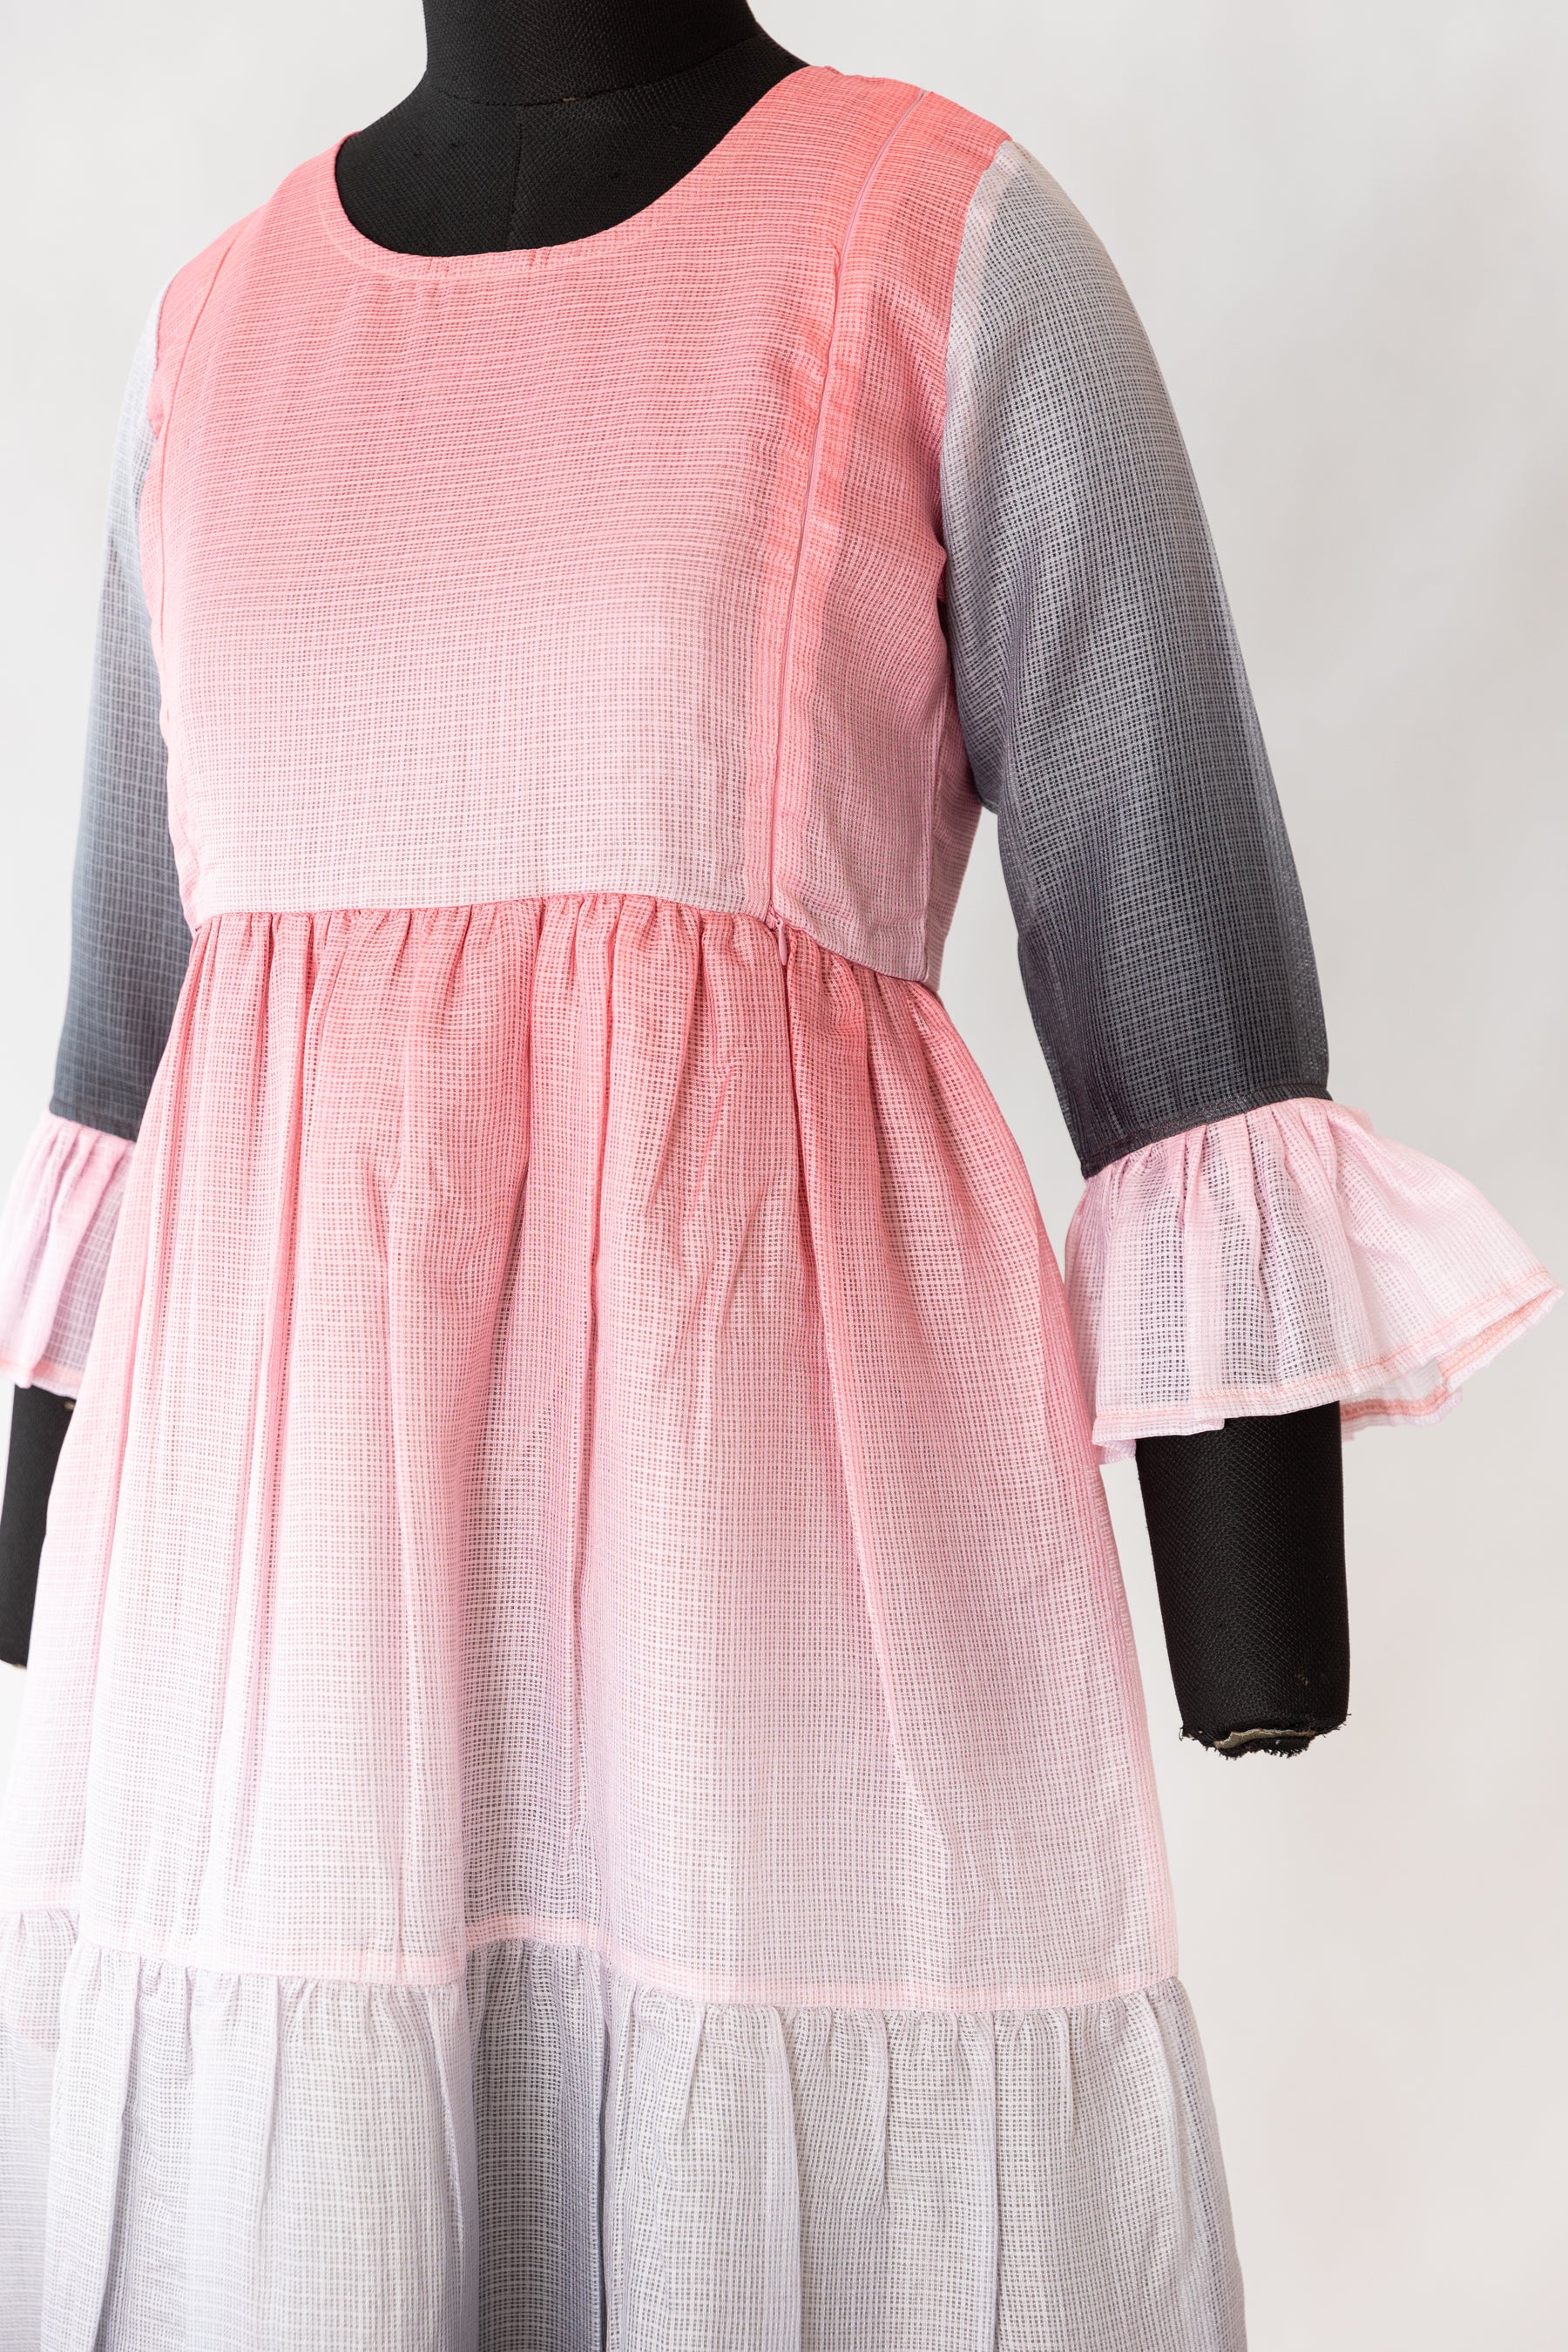 Pink Ombré Dress - Maternity wear